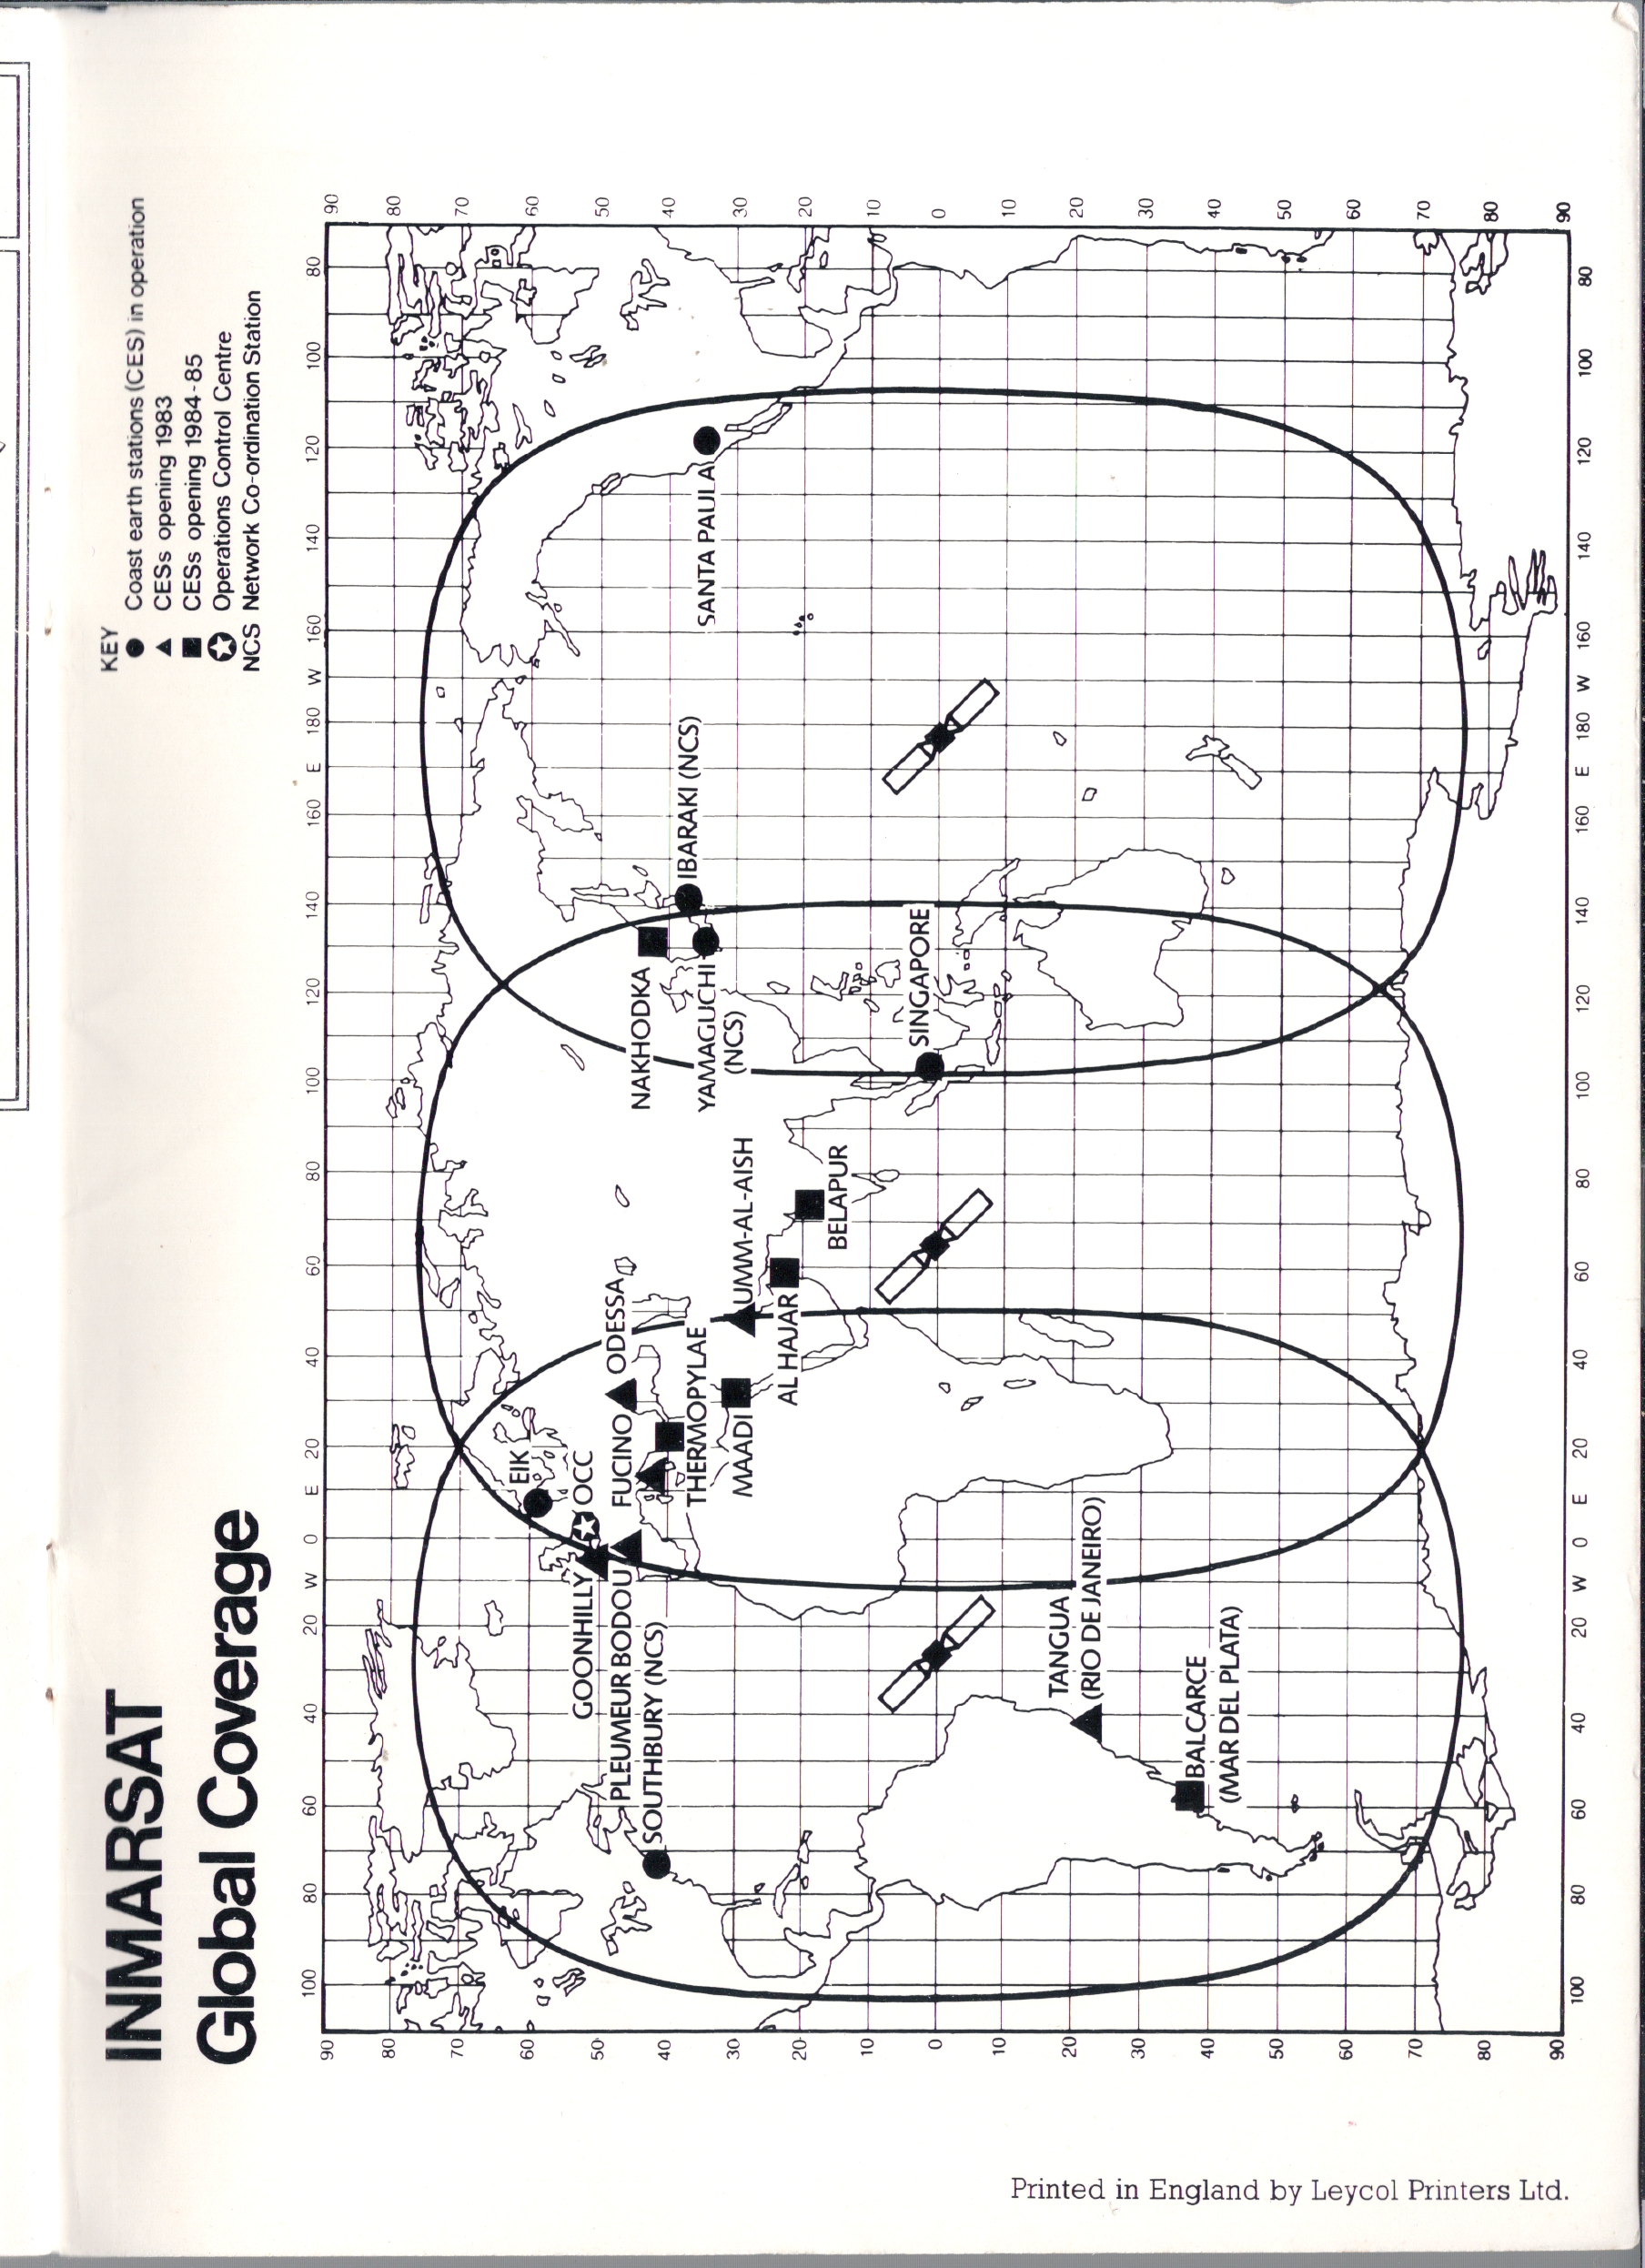 SHORE-TO-SHIP CALLING PROCEDURES 1982_18.JPG